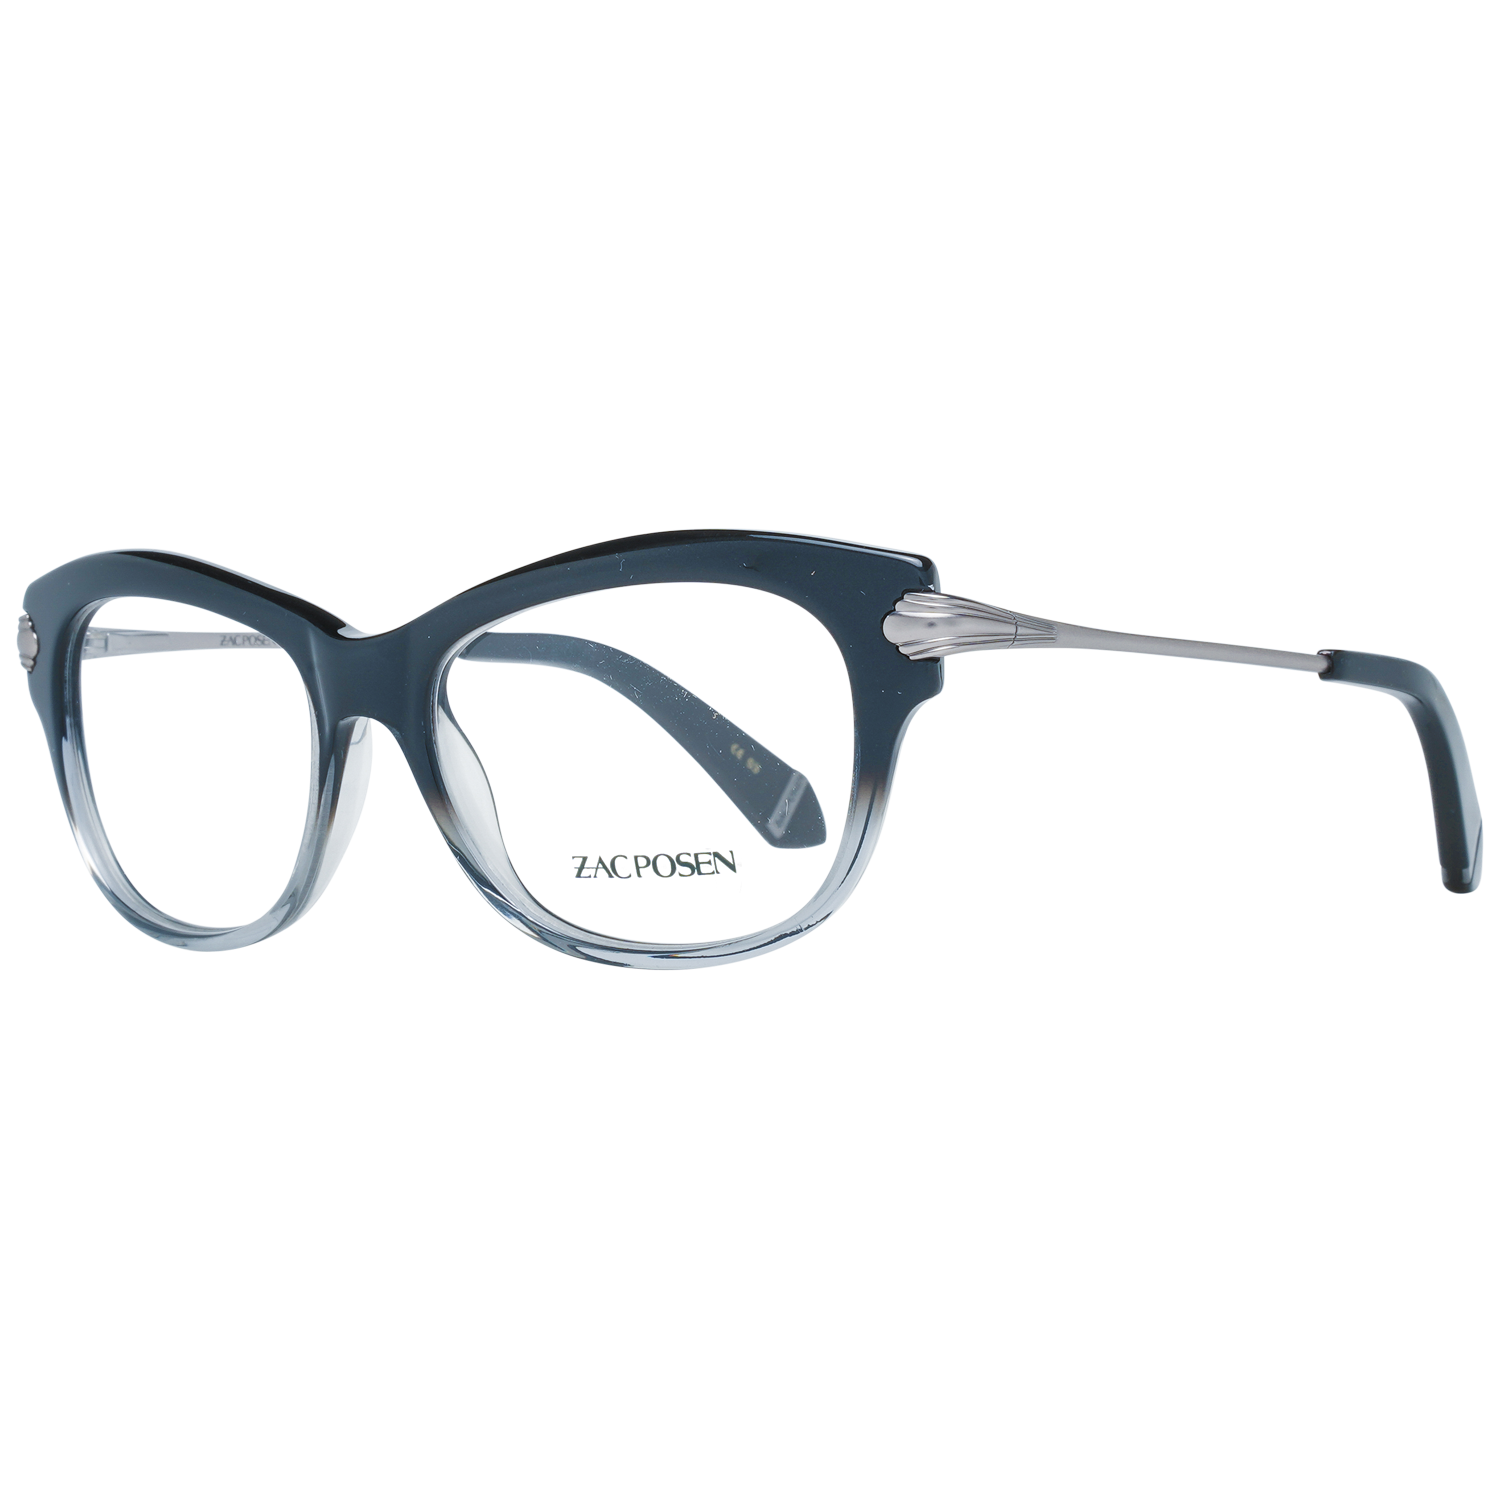 Zac Posen Frames Zac Posen Optical Frame ZLIS SM 51 Lisa Eyeglasses Eyewear UK USA Australia 